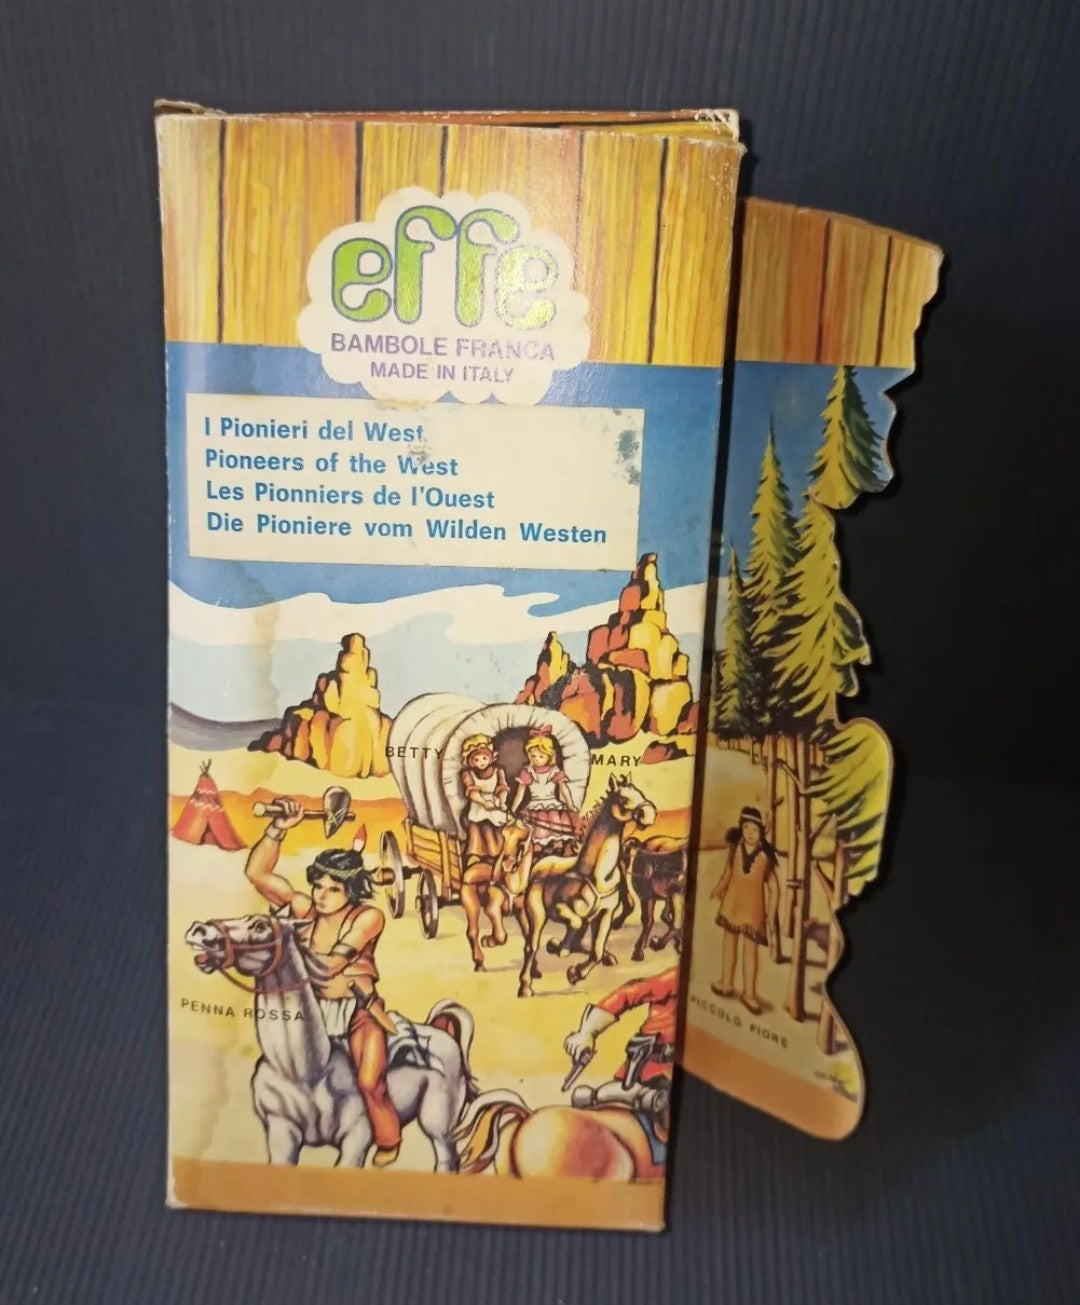 Bambola I Pionieri Del West, Effe originale anni 70